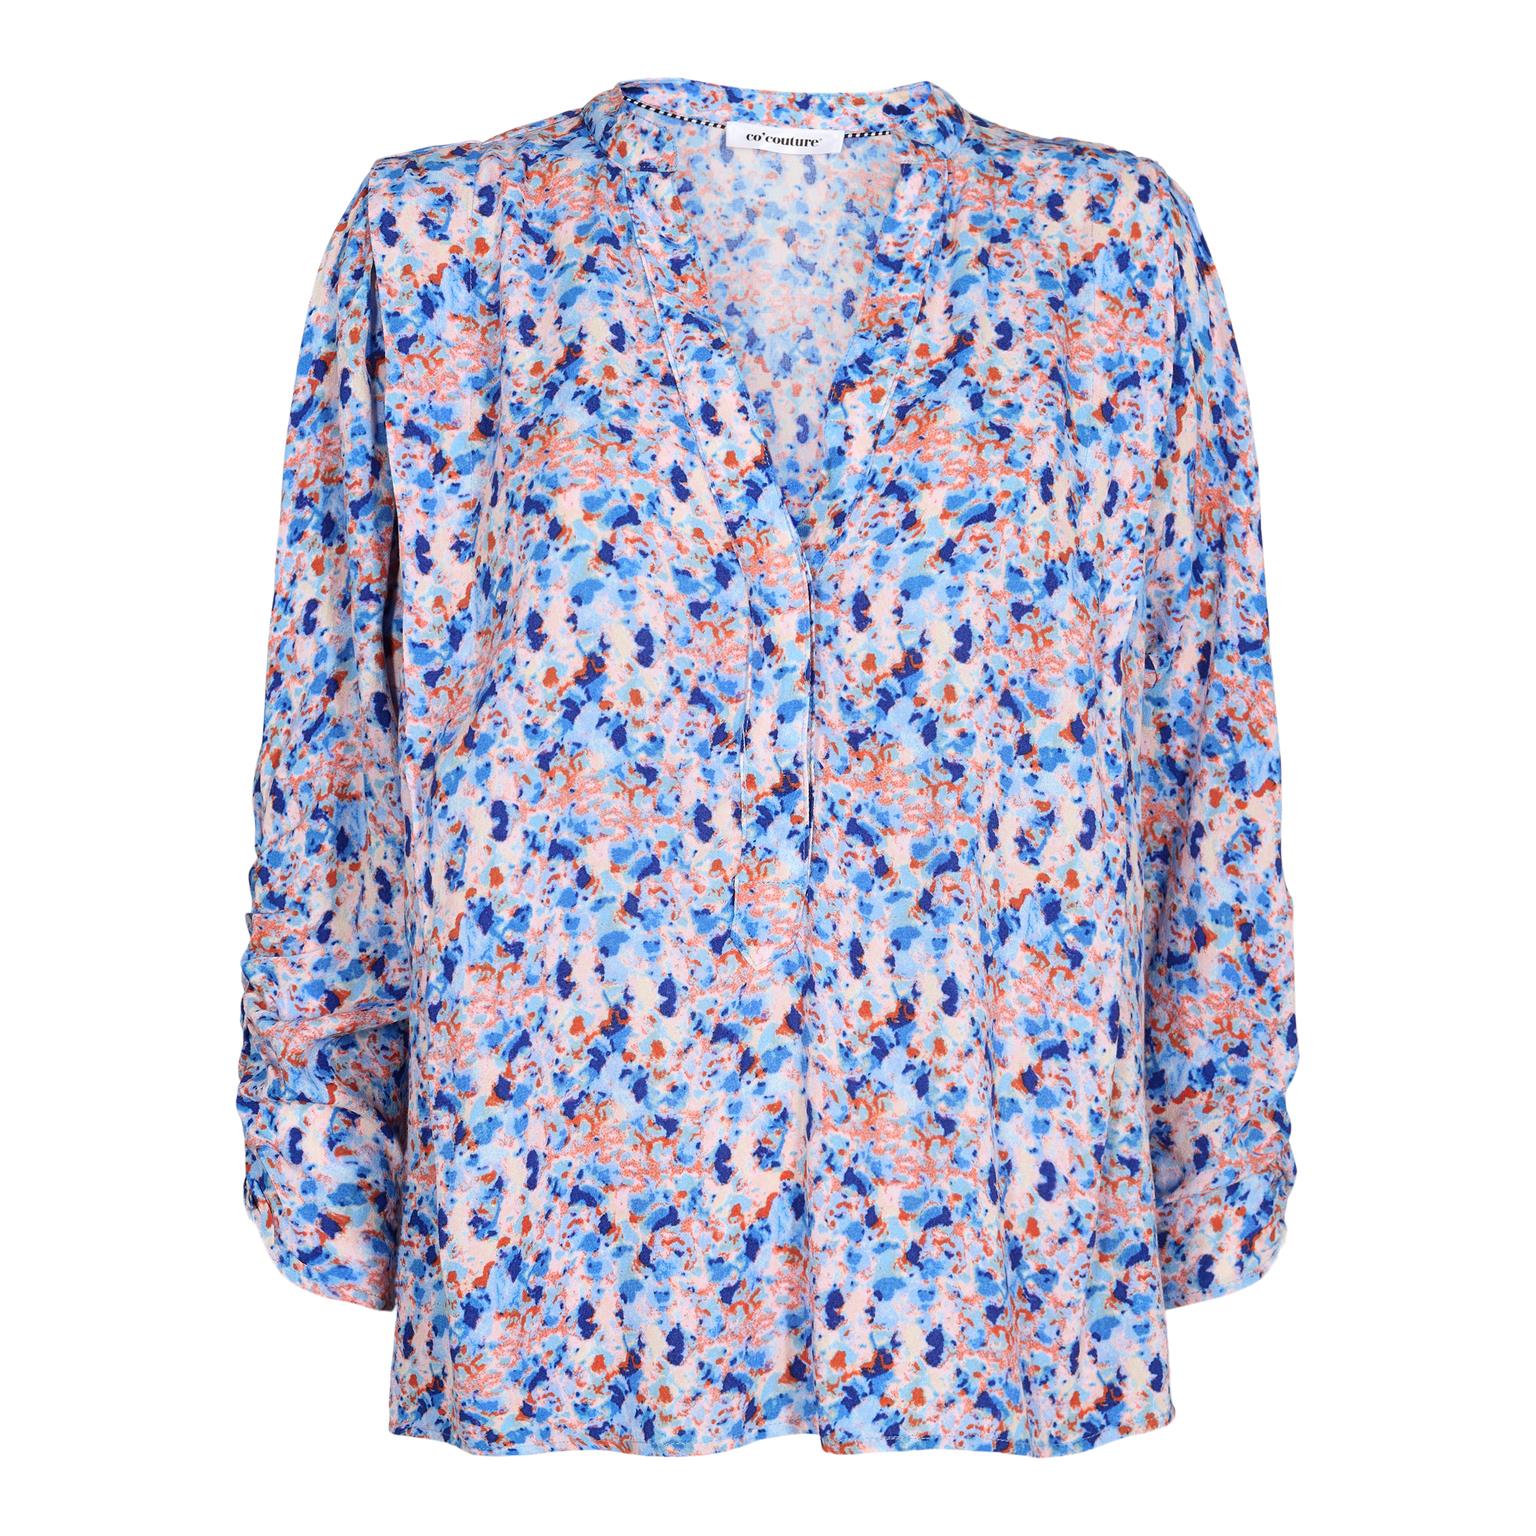 Calli wing blouse blue 35116